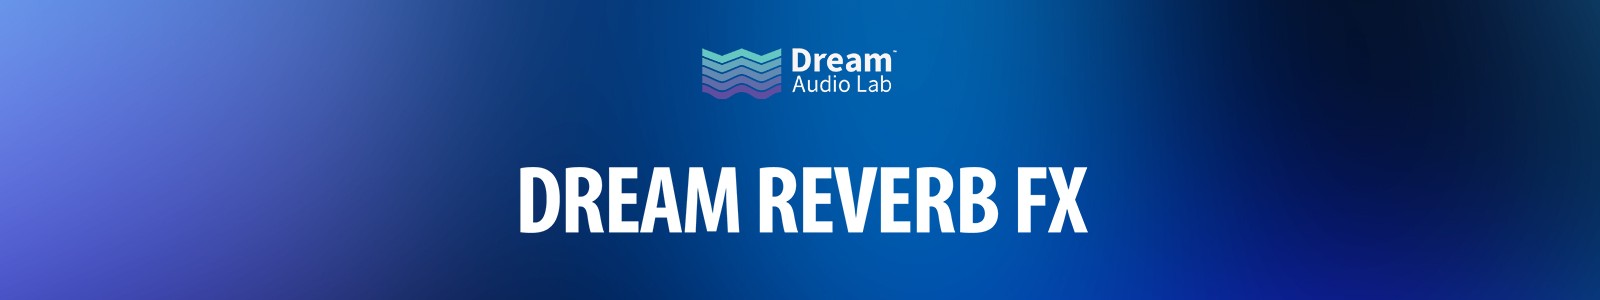 Dream Reverb FX by Dream Audio Lab